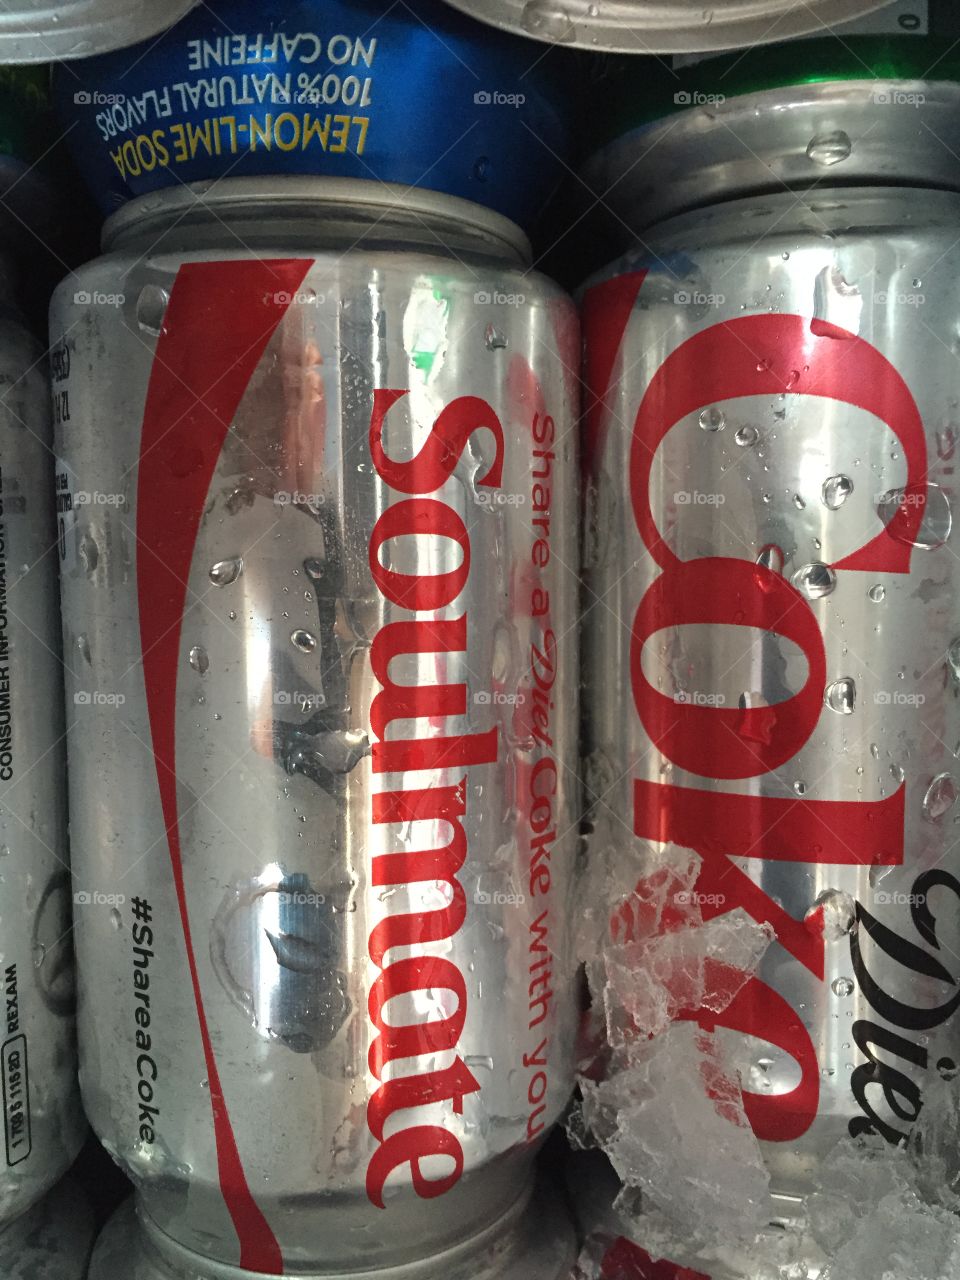 Coke. Coke soulmate